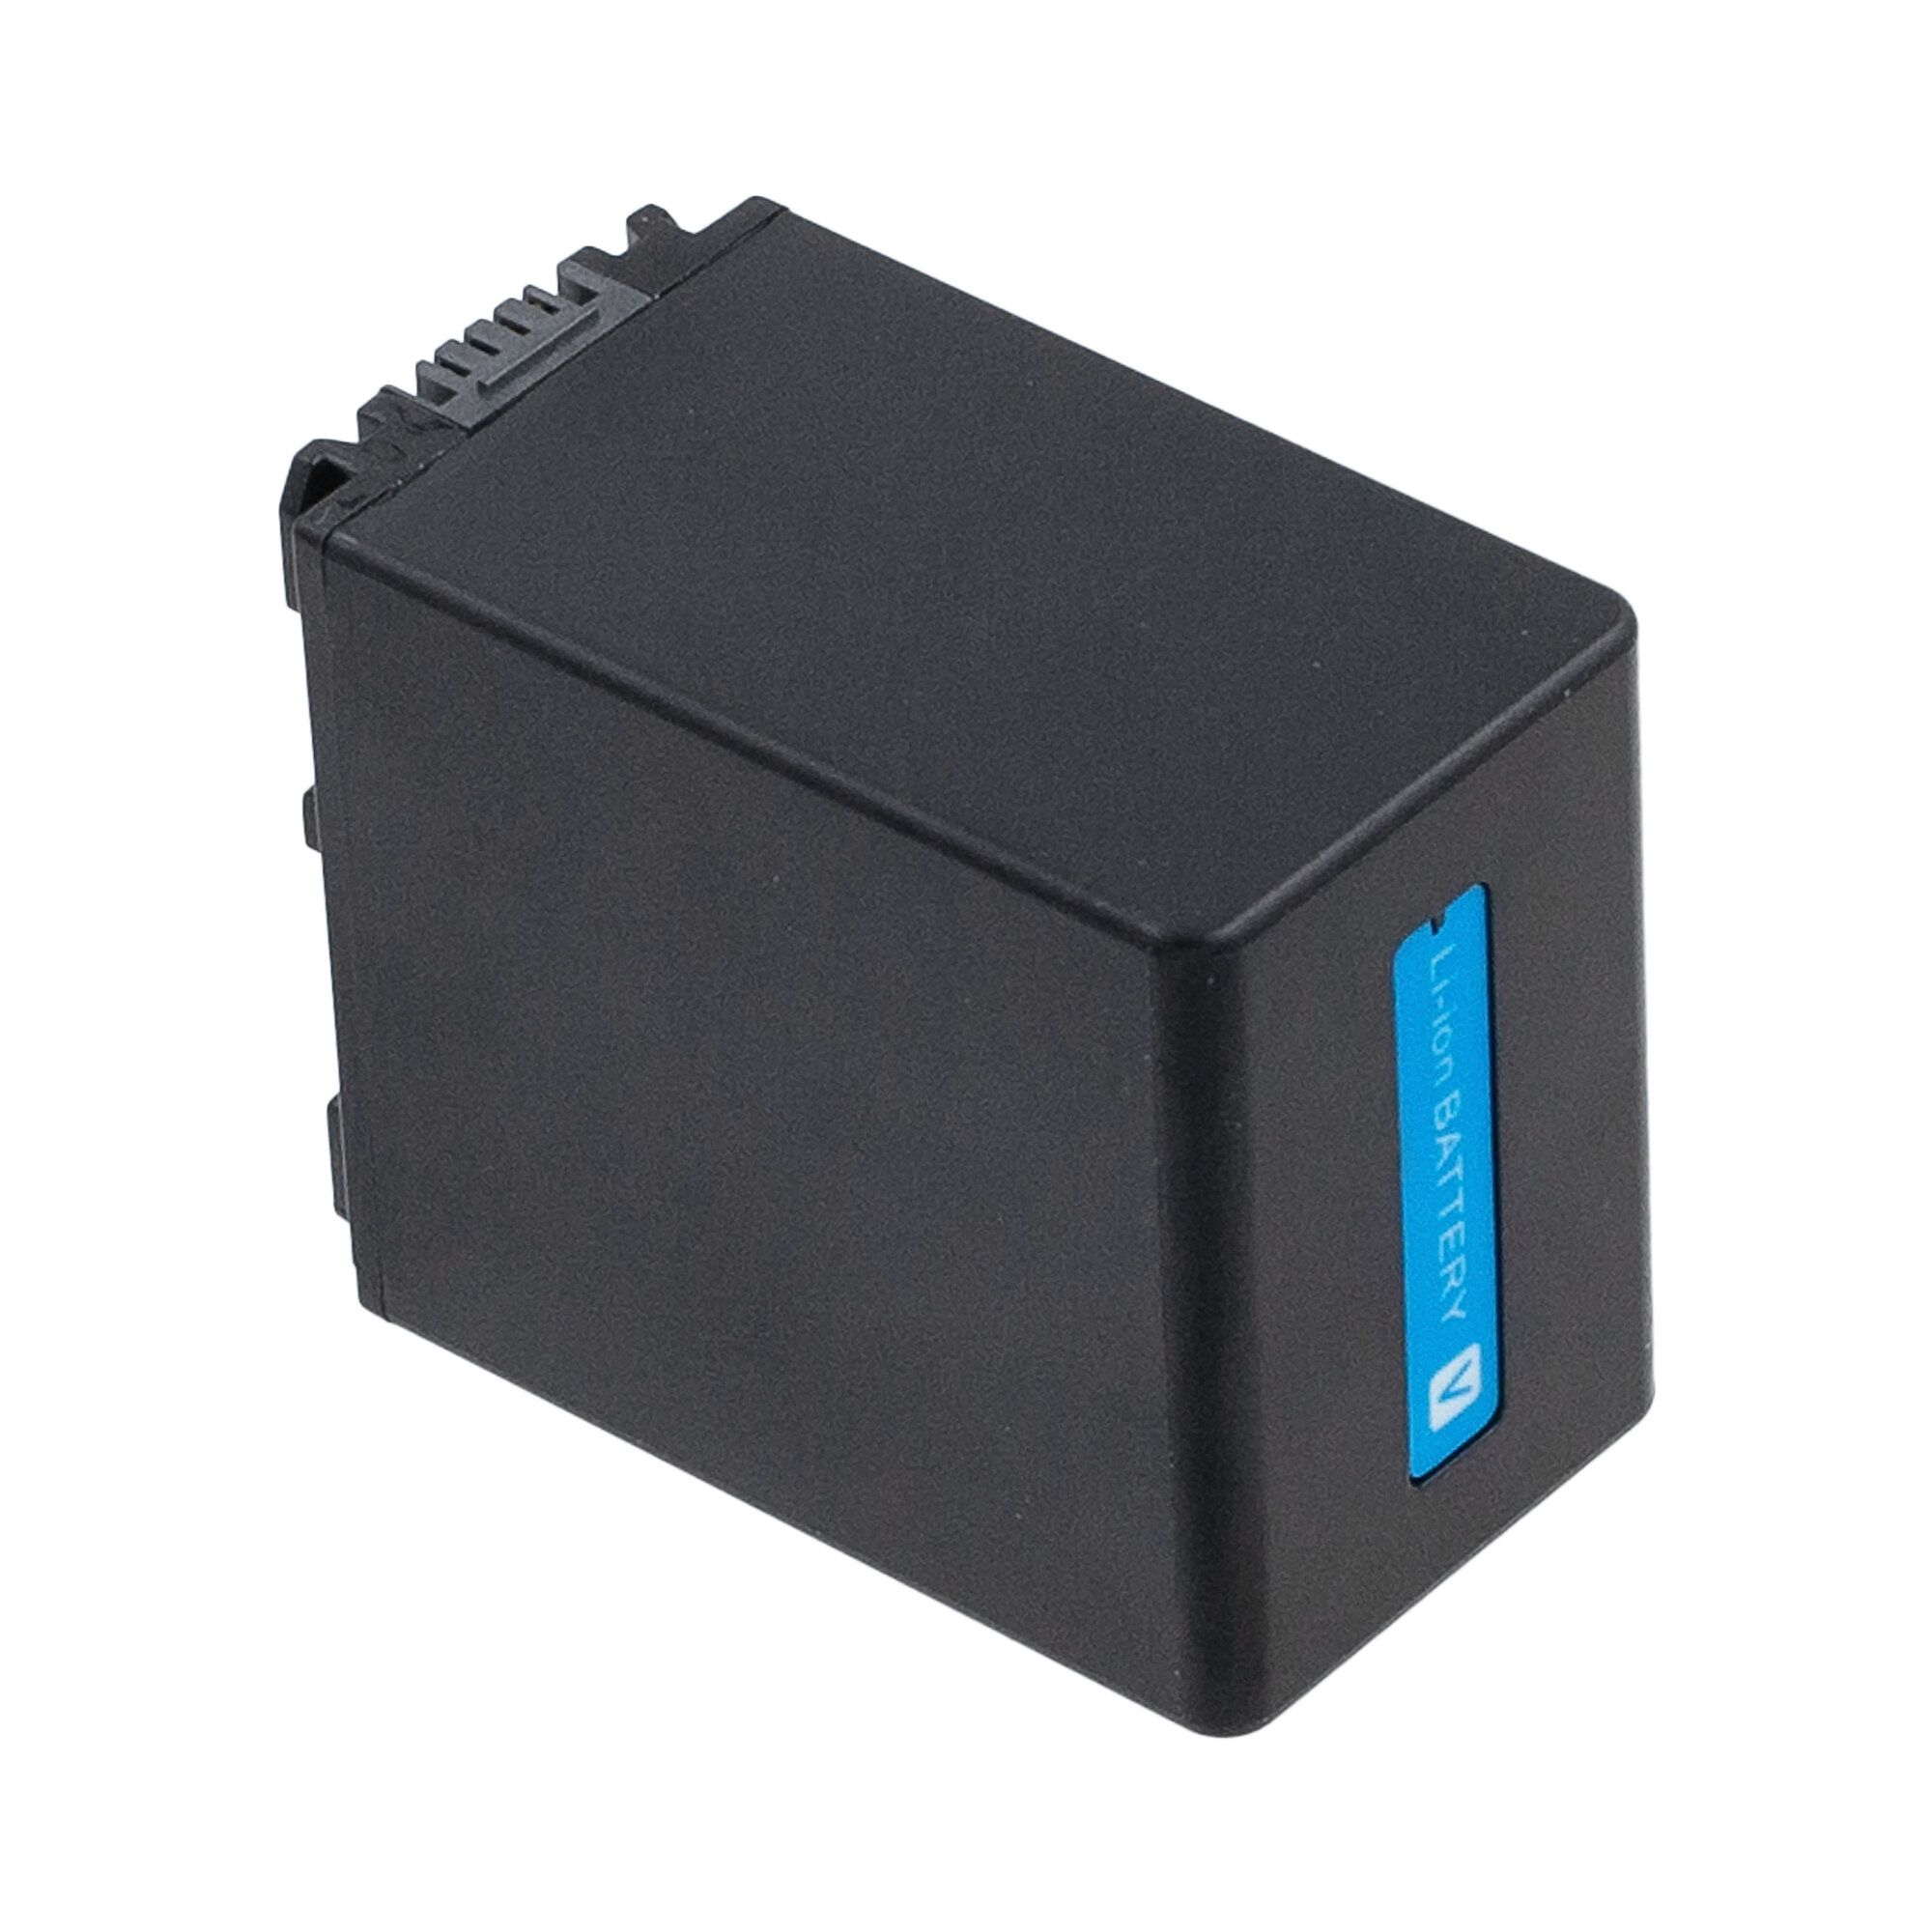 Аккумулятор NP-FV50 / NP-FV100 / NP-FV70 для фотоаппаратов Sony hdr-cx360e / hdr-cx550e / hdr-cx110e / dcr-sx45e / hdr-cx130e / hdr-cx200e - 3900mah